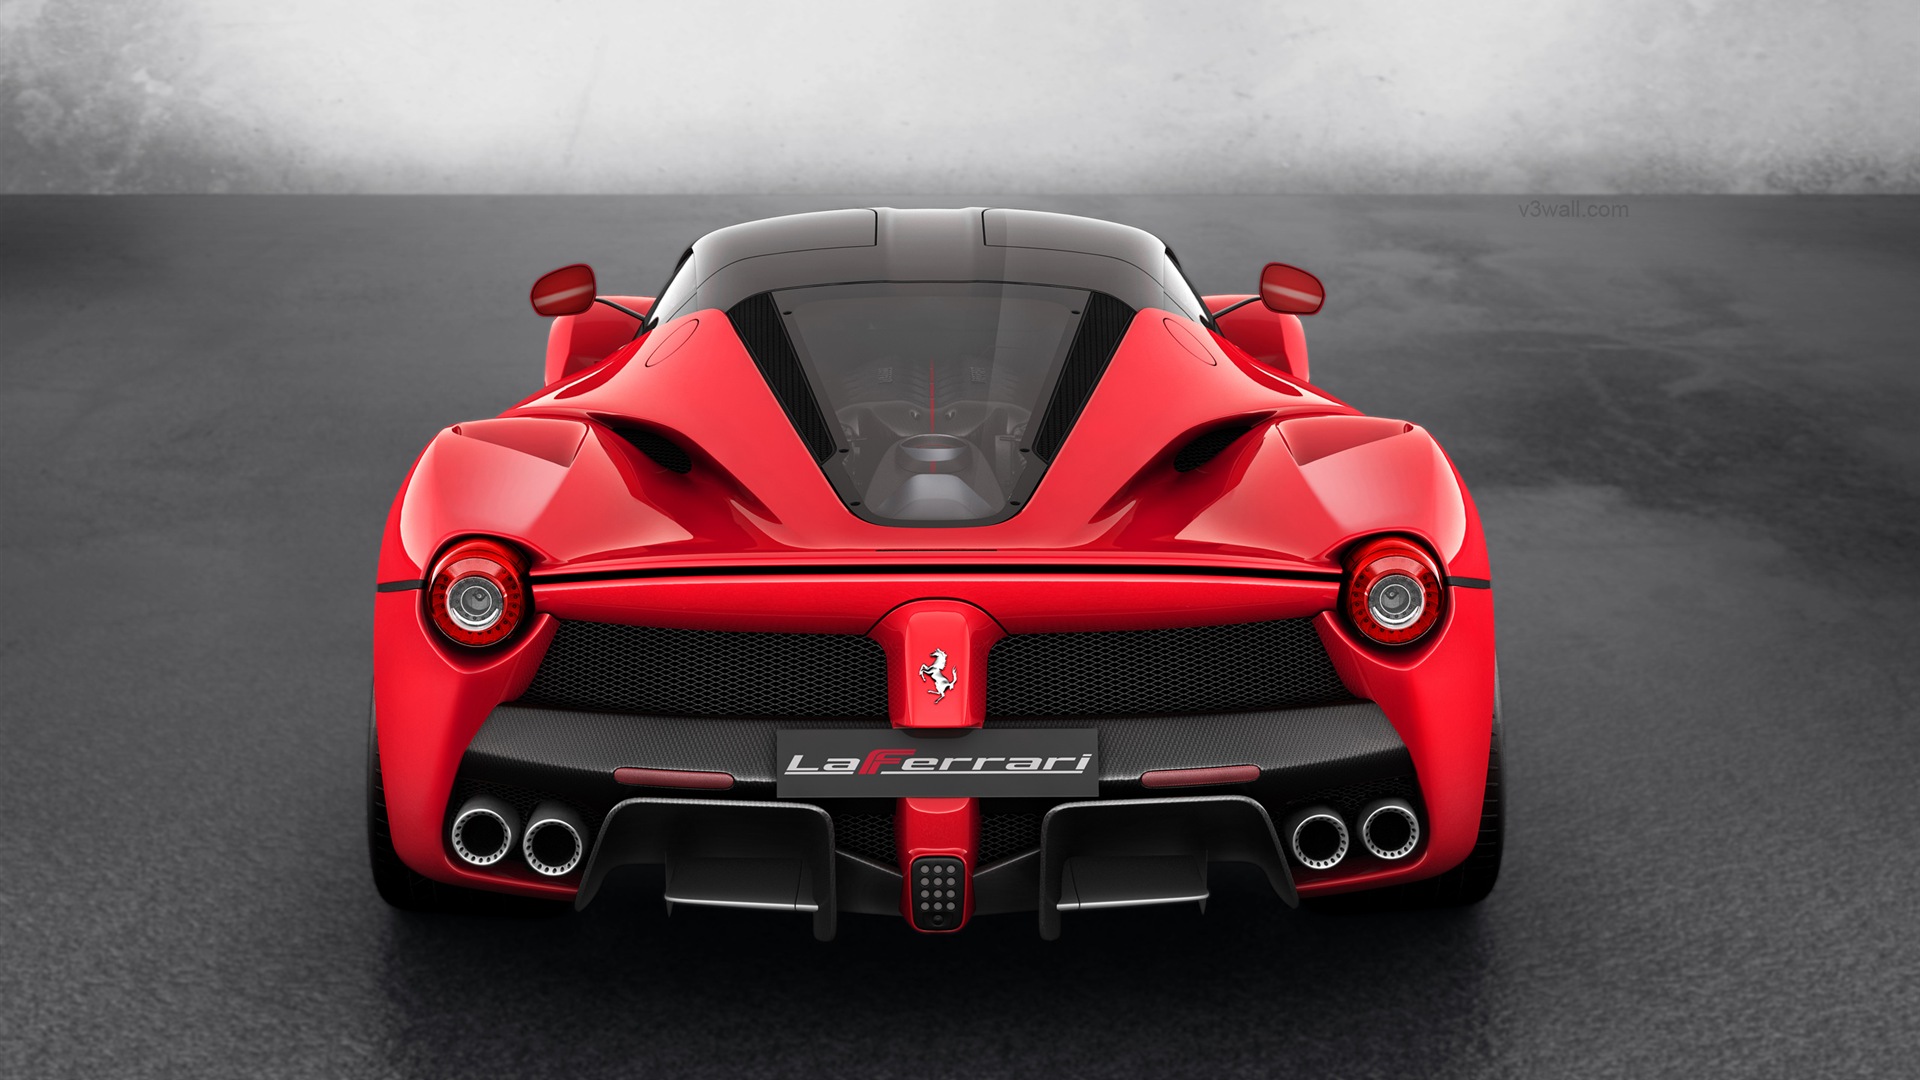 2013 Ferrari LaFerrari 法拉利LaFerrari红色超级跑车高清壁纸8 - 1920x1080